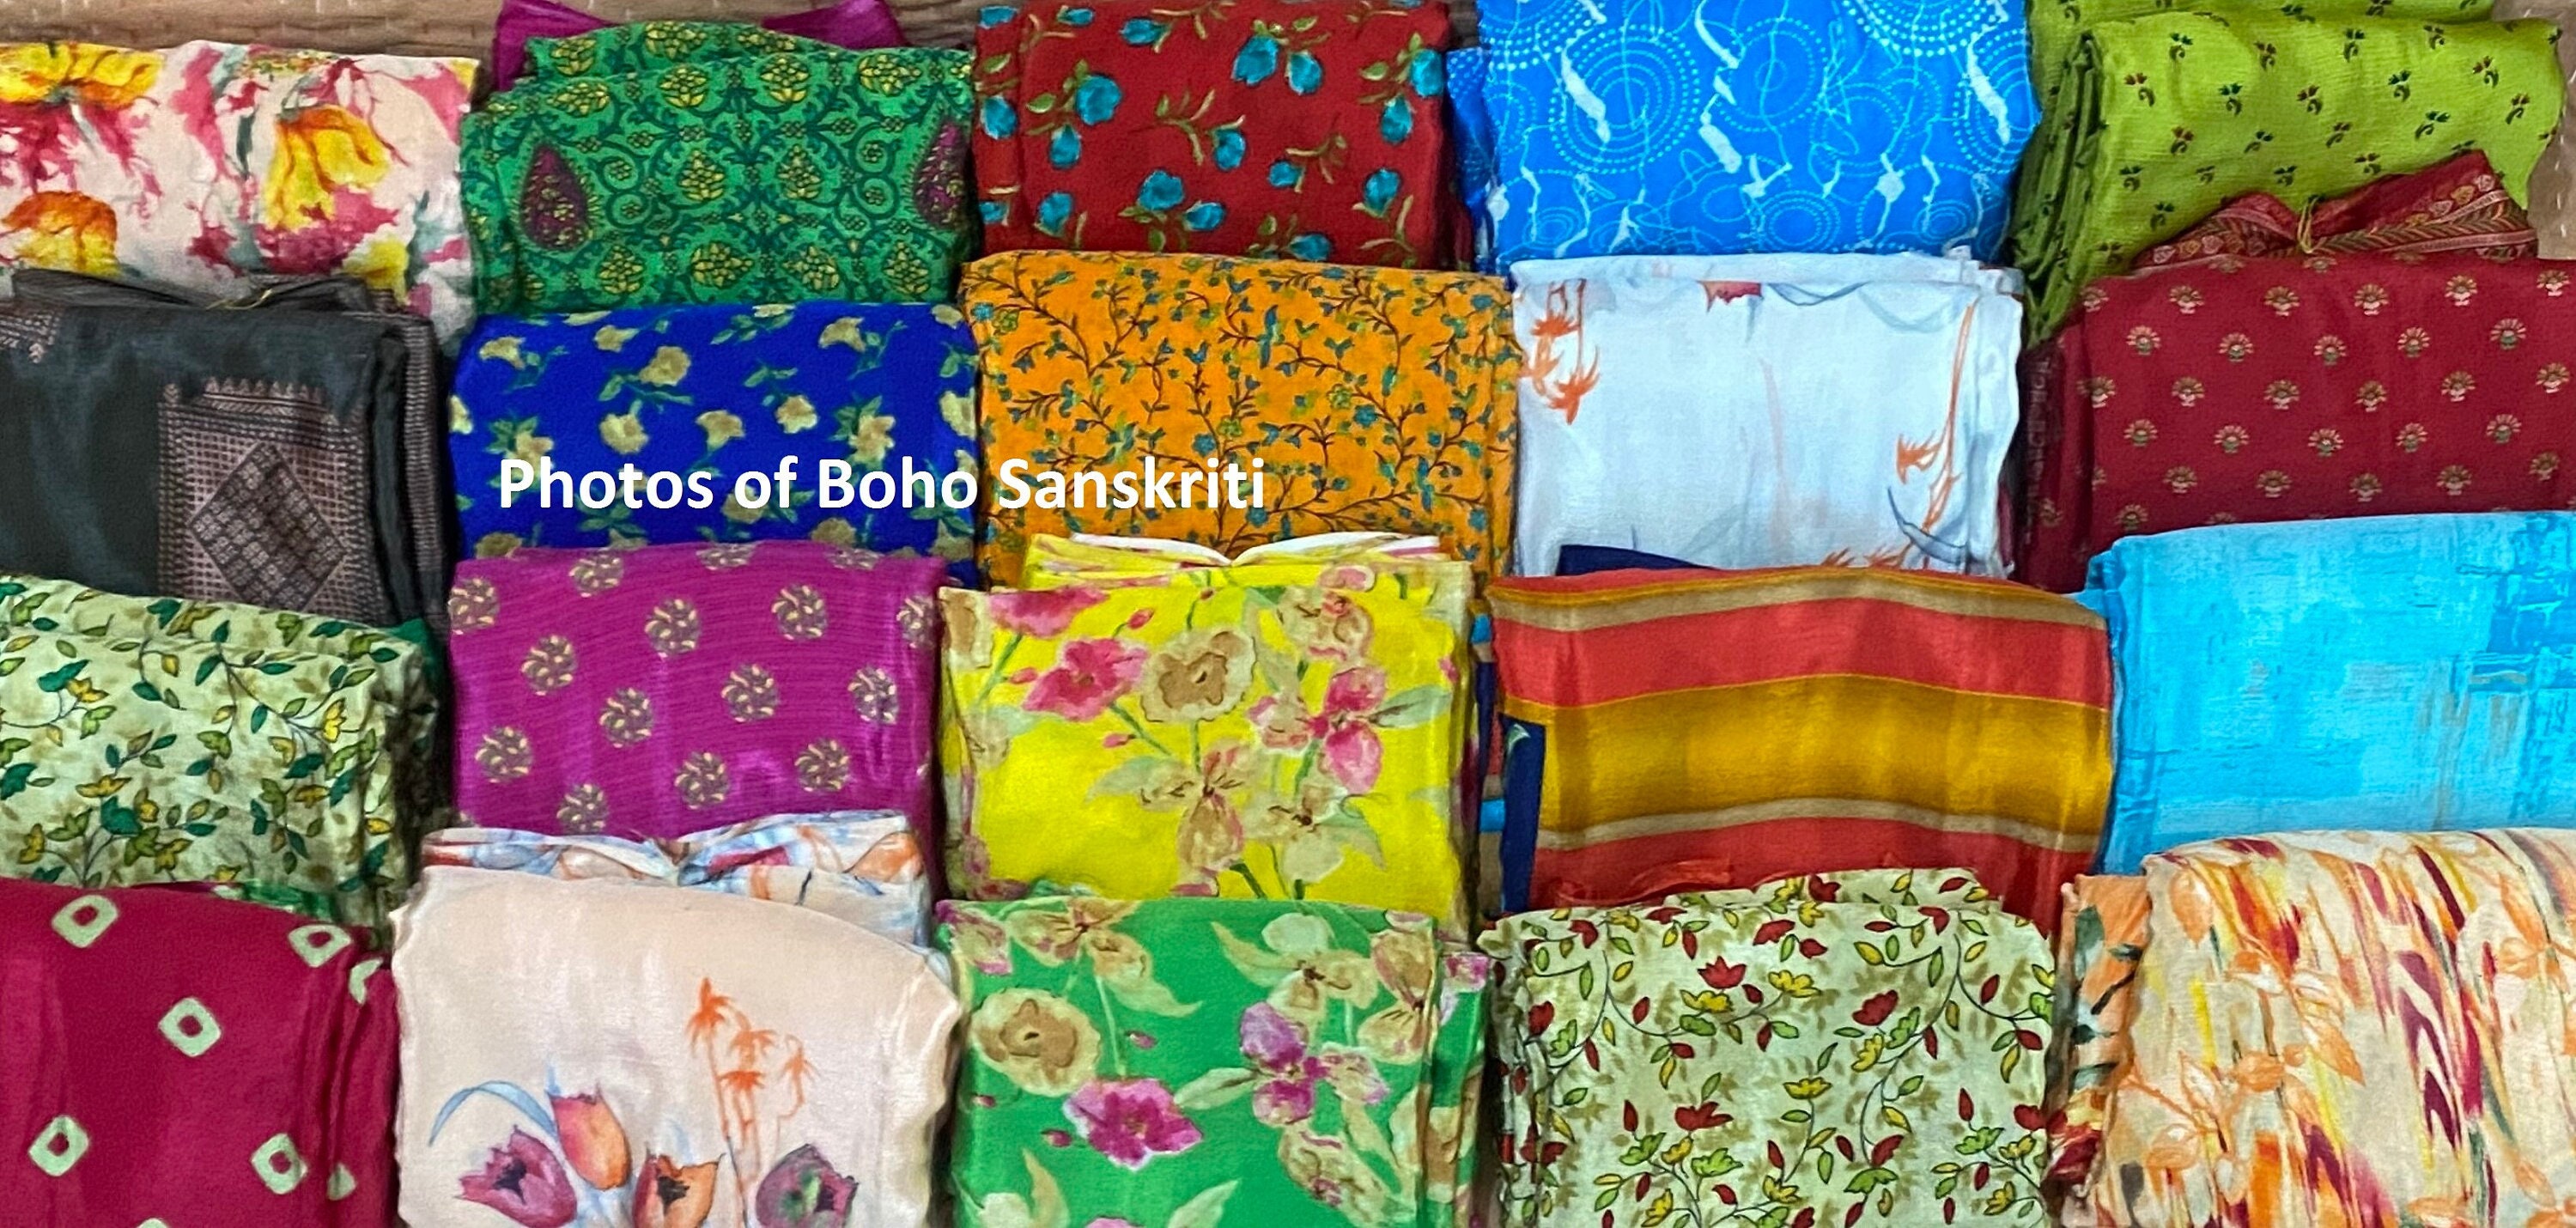 Indian Sari Fabric — Family Tree Resale 1